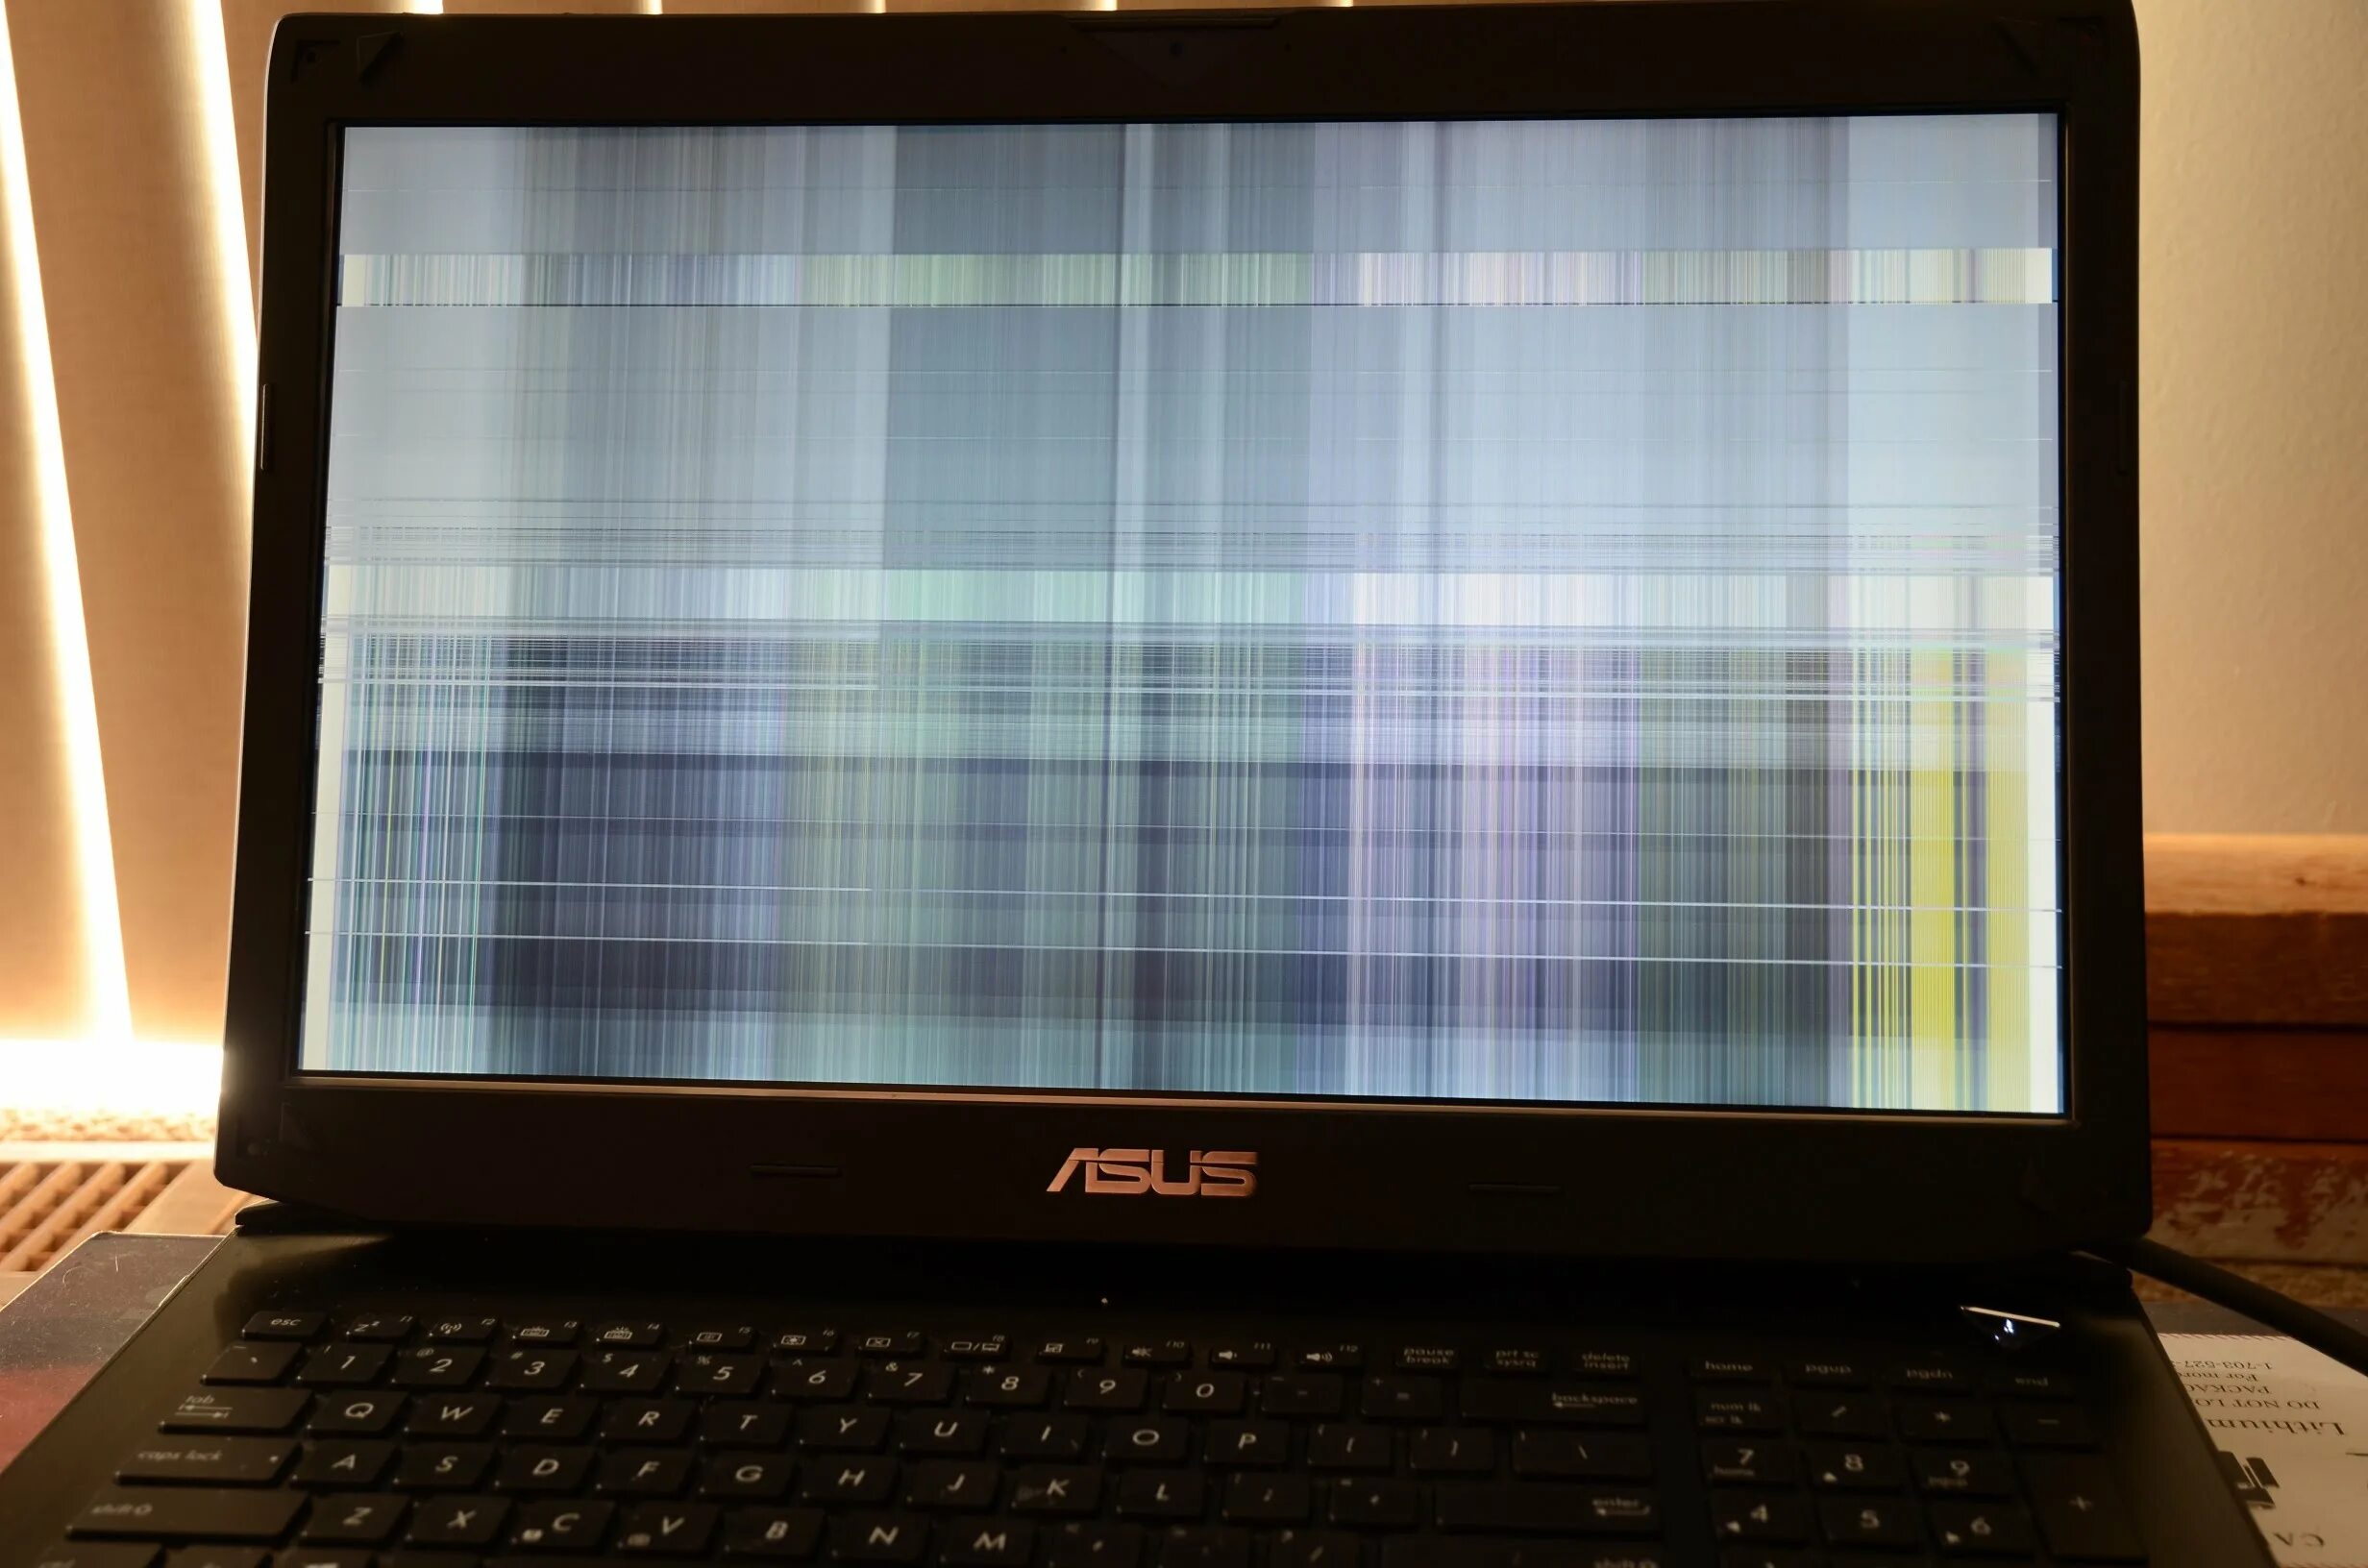 ASUS Laptop's Screen. Монитор ноутбука асус. Разбитый экран ноутбука. Ноутбук с разбитым экраном. Буквы на экране ноутбука